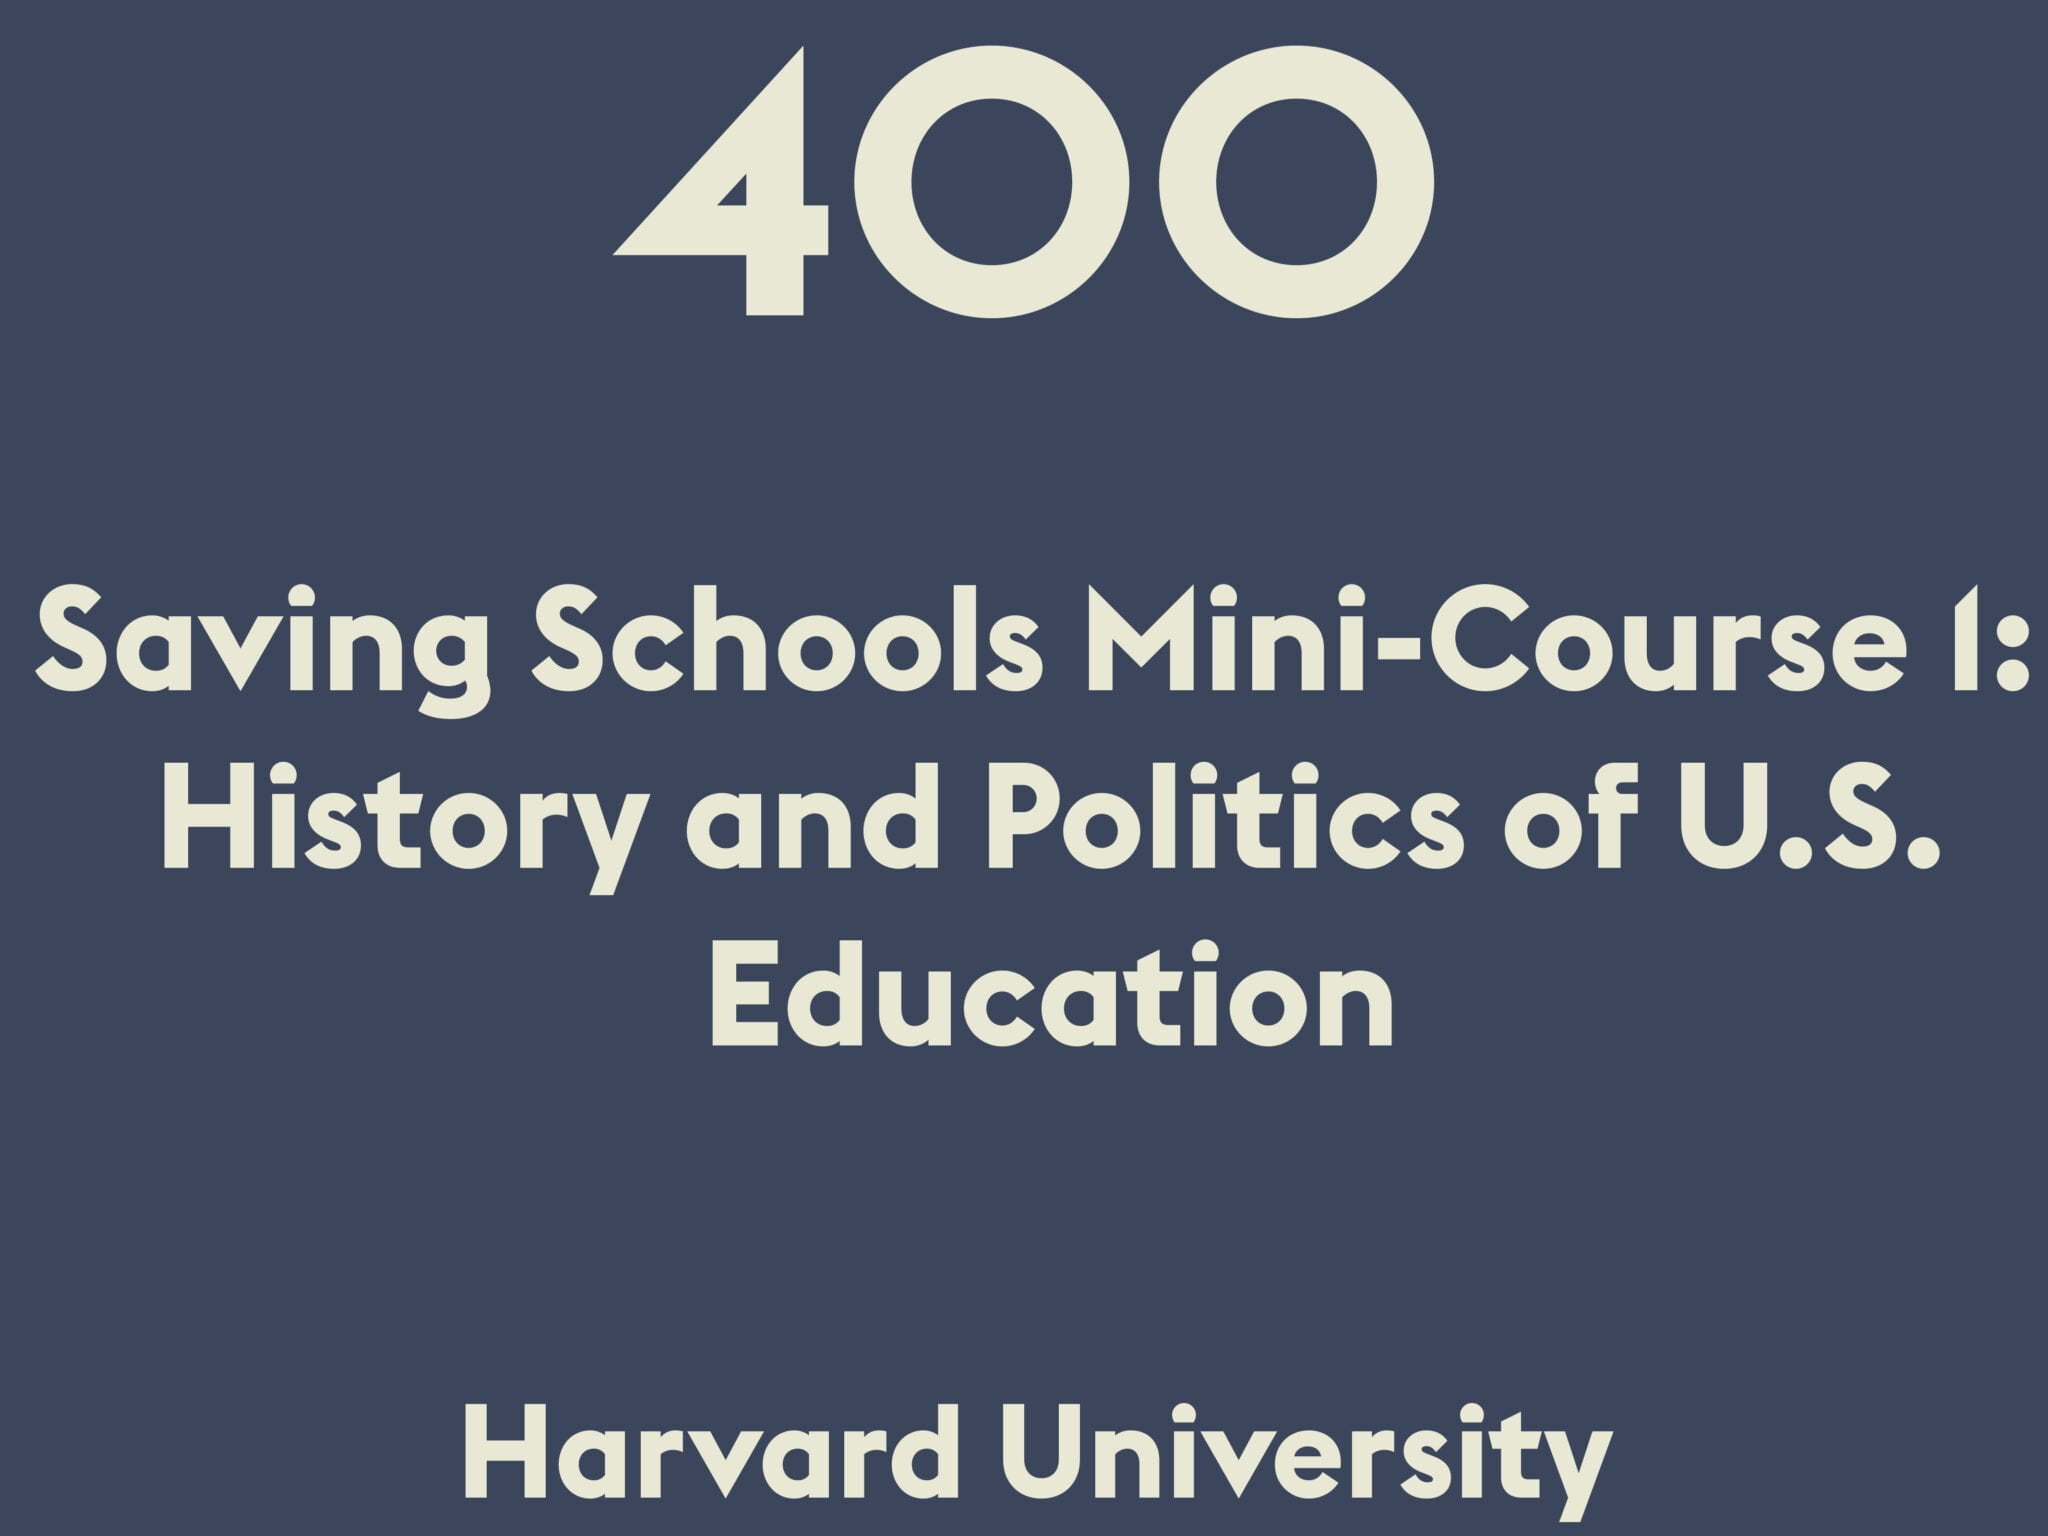 Saving Schools Mini-Course 1: History and Politics of U.S. Education